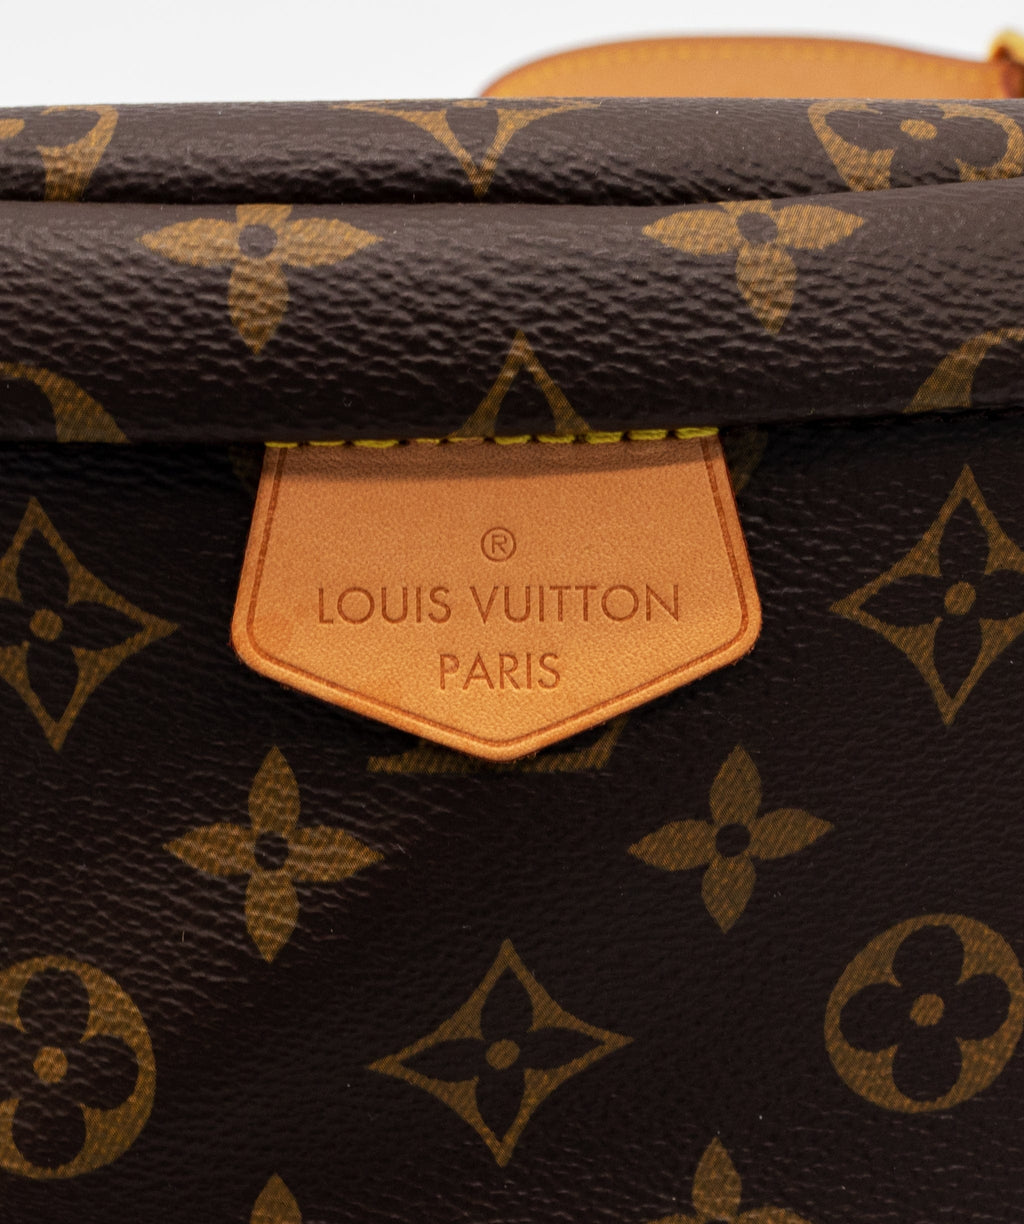 Authentic LOUIS VUITTON Monogram Bum bag M43644 Bag Used from